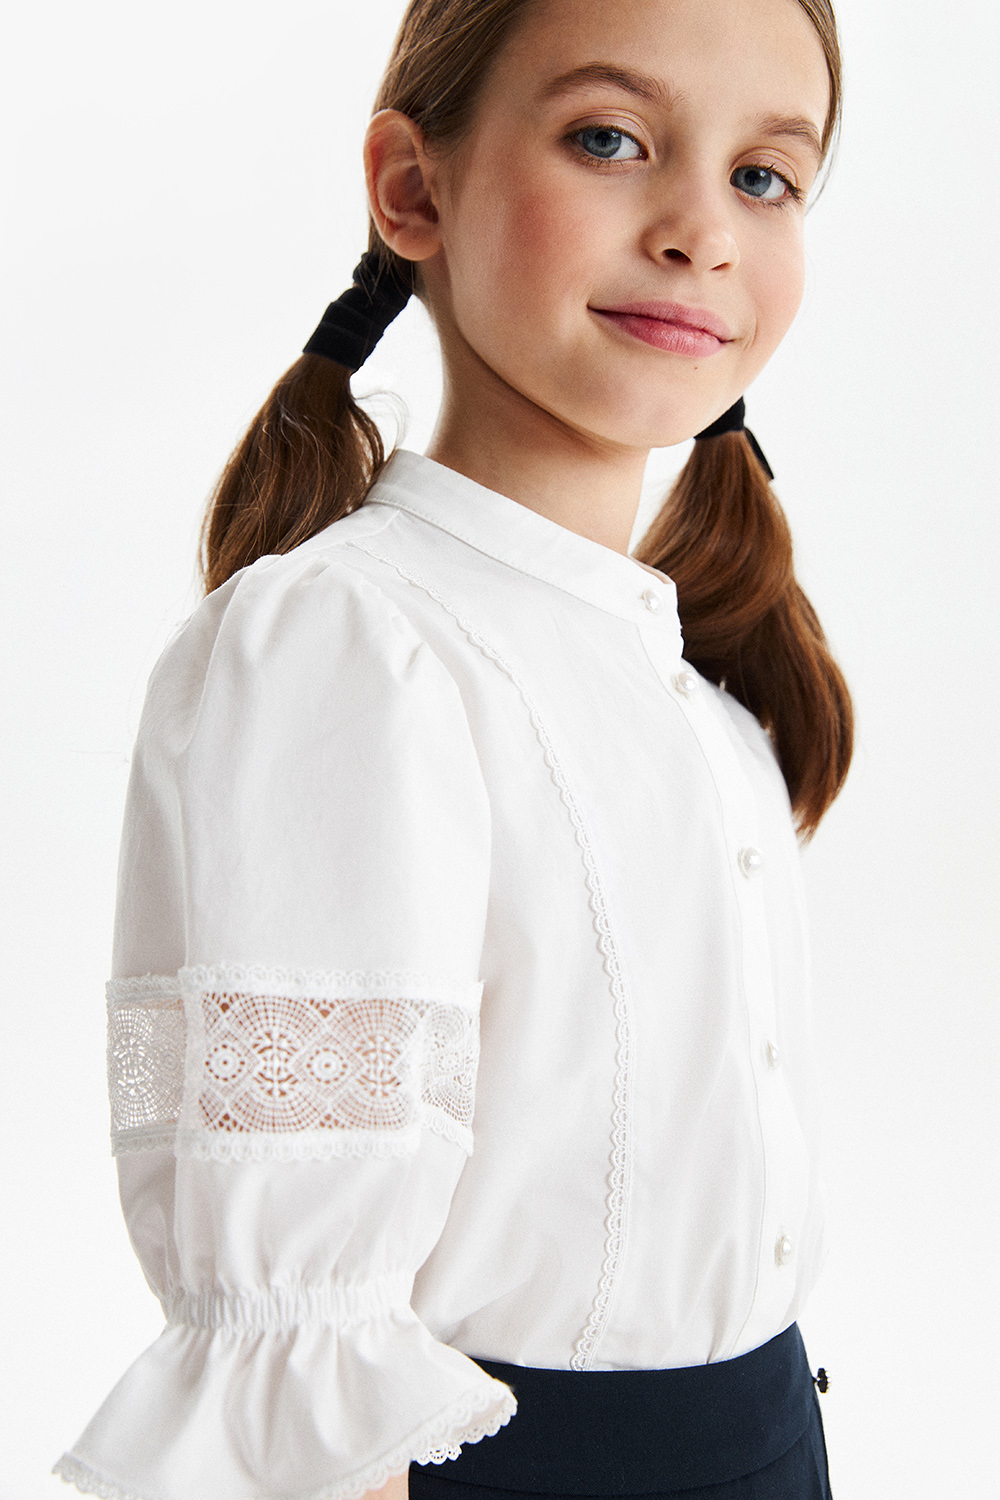 Хлопковая блузка с рукавами-фонариками (SSFSG-329-23107-201) Silver Spoon